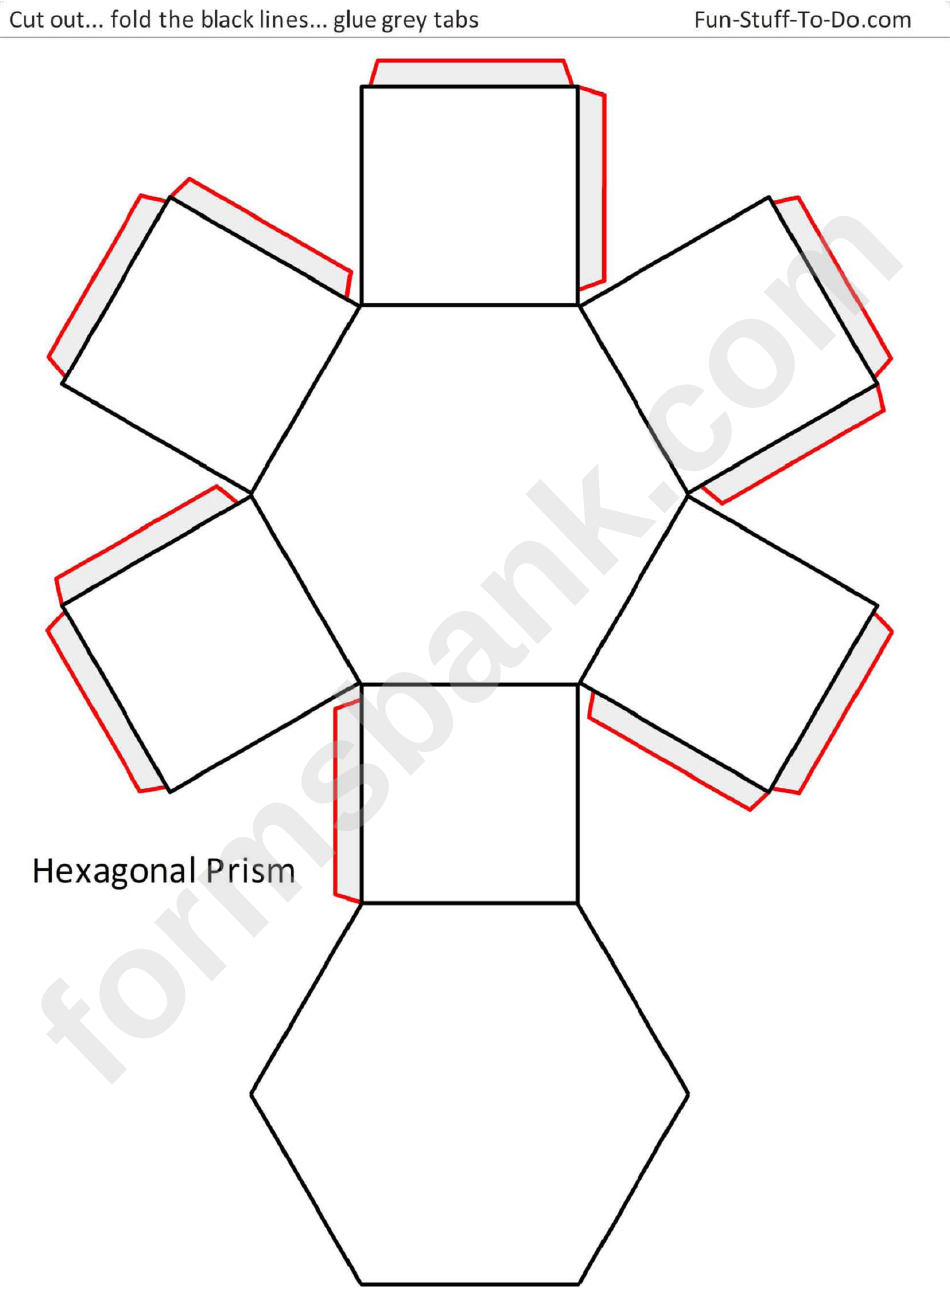 Hexagonal Prism Templates printable pdf download